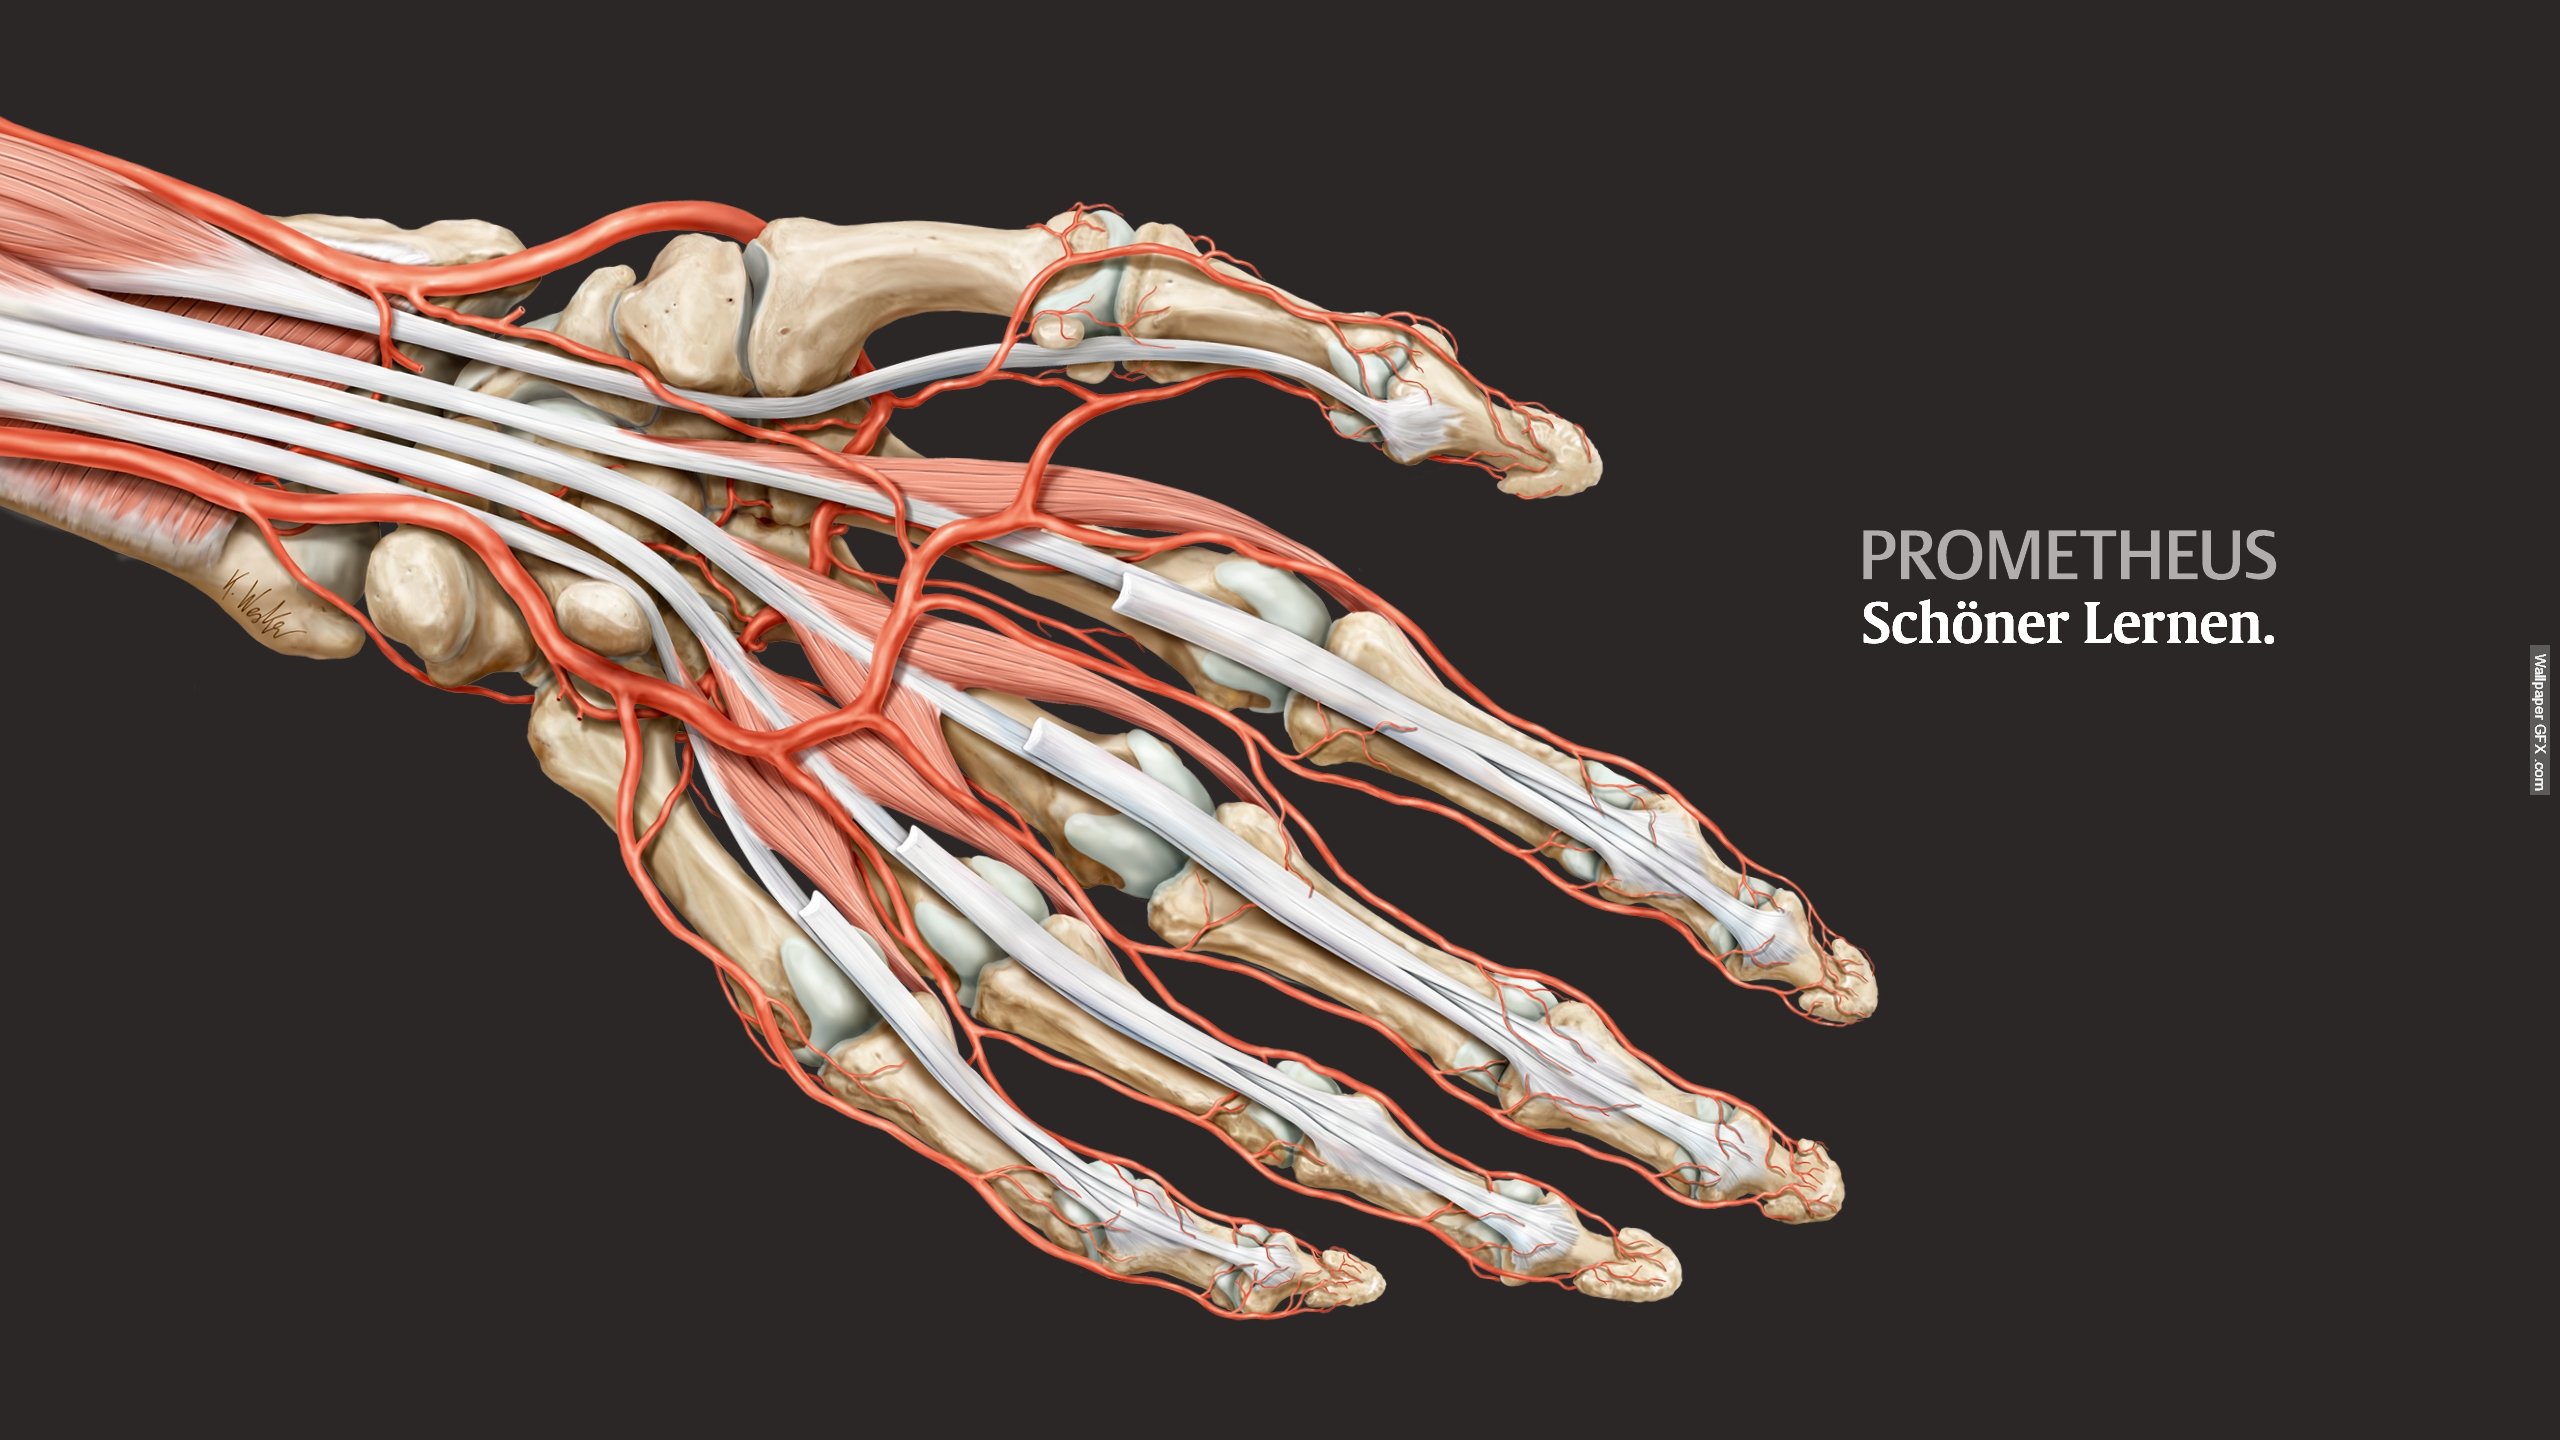 Human Anatomy wallpaper by ptwsyvnn  Download on ZEDGE  cff2